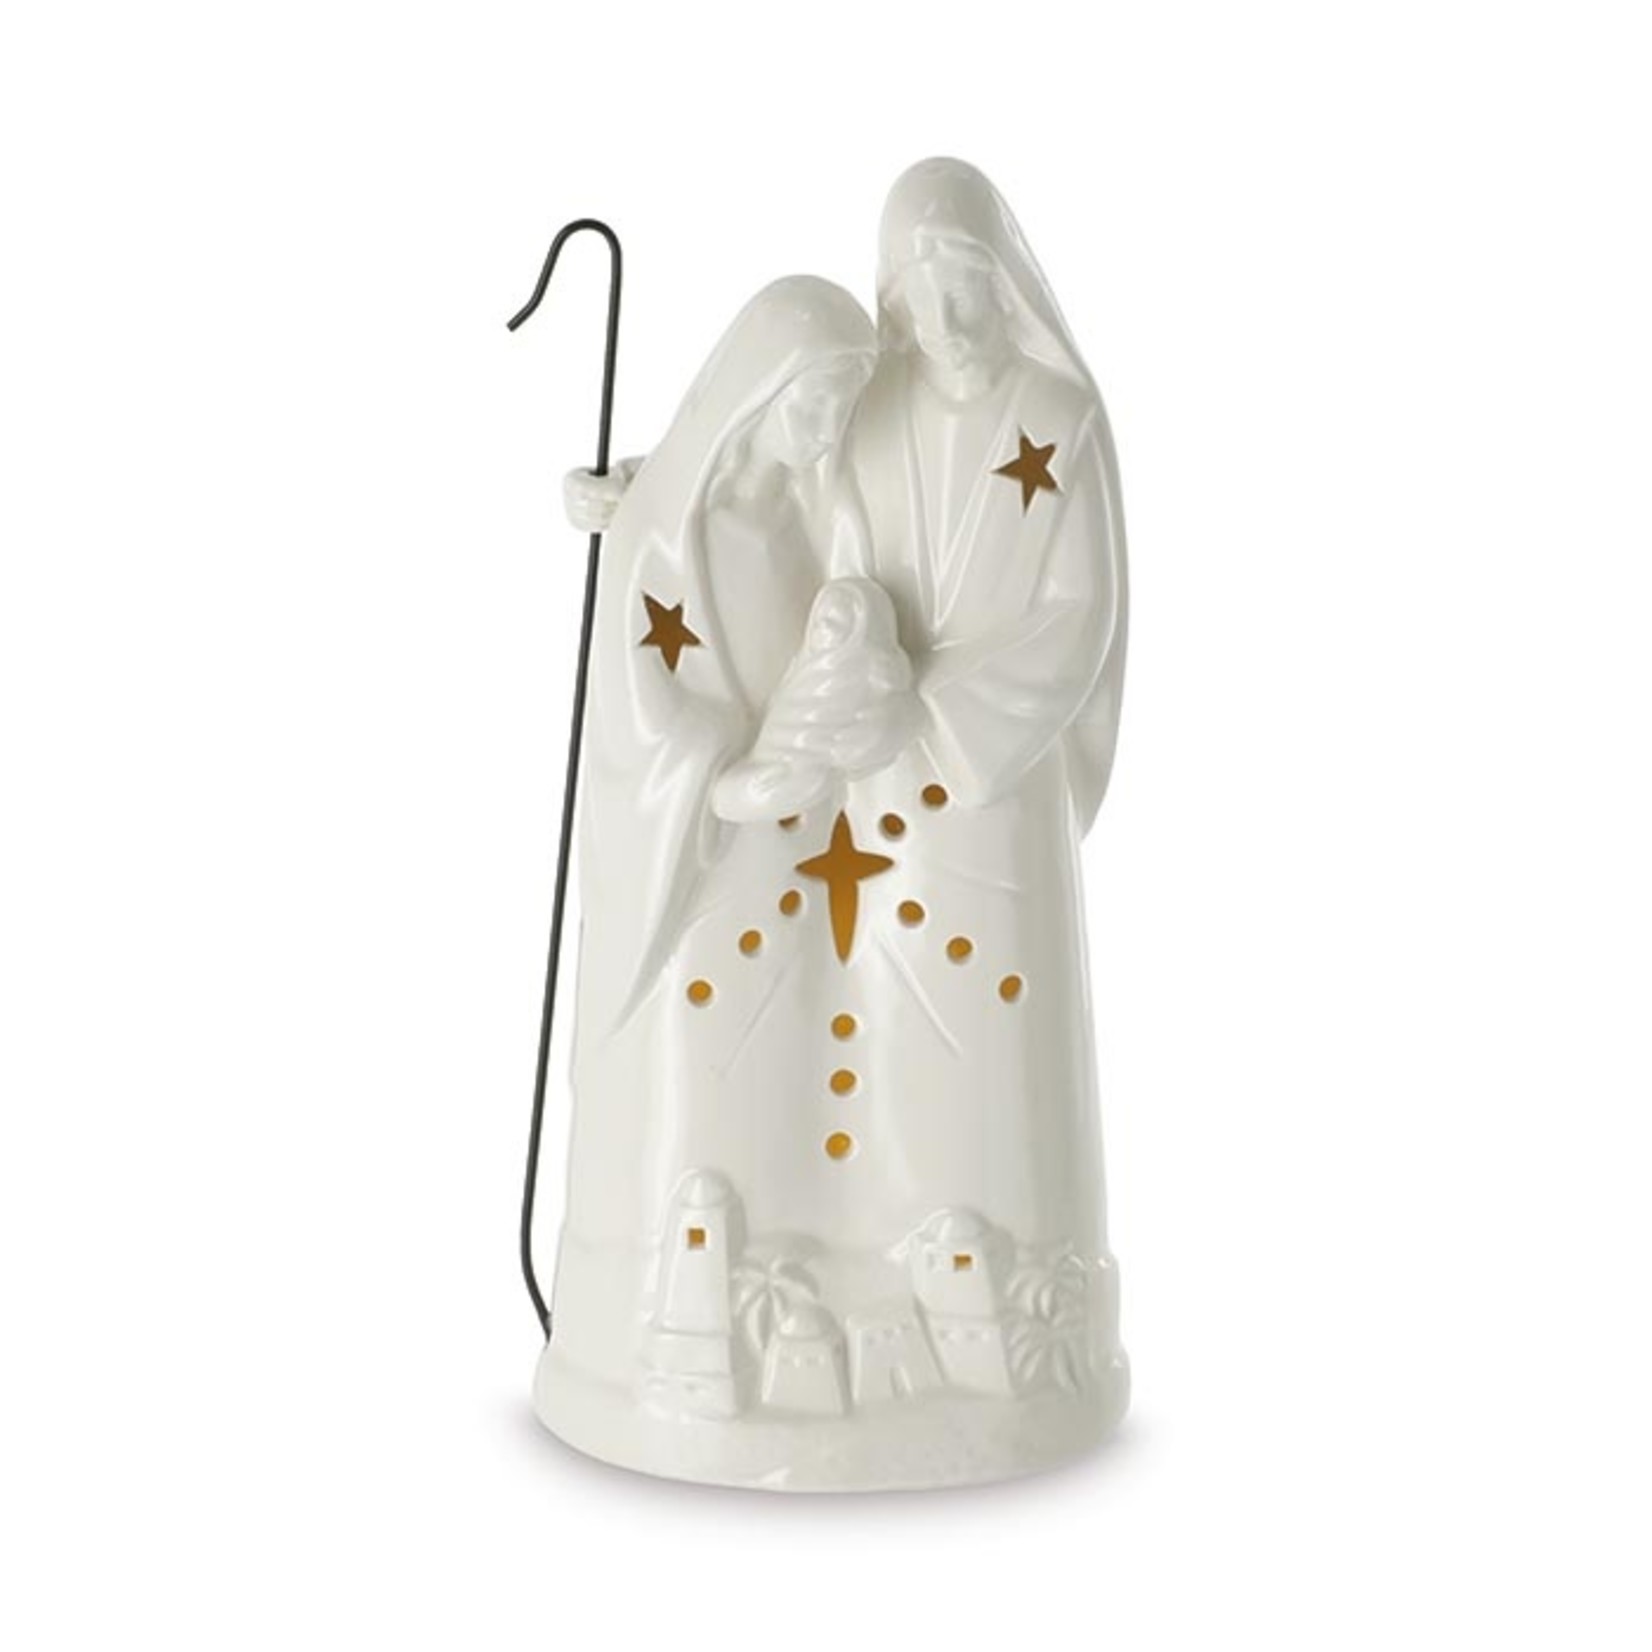 Ivory praying angel figurine